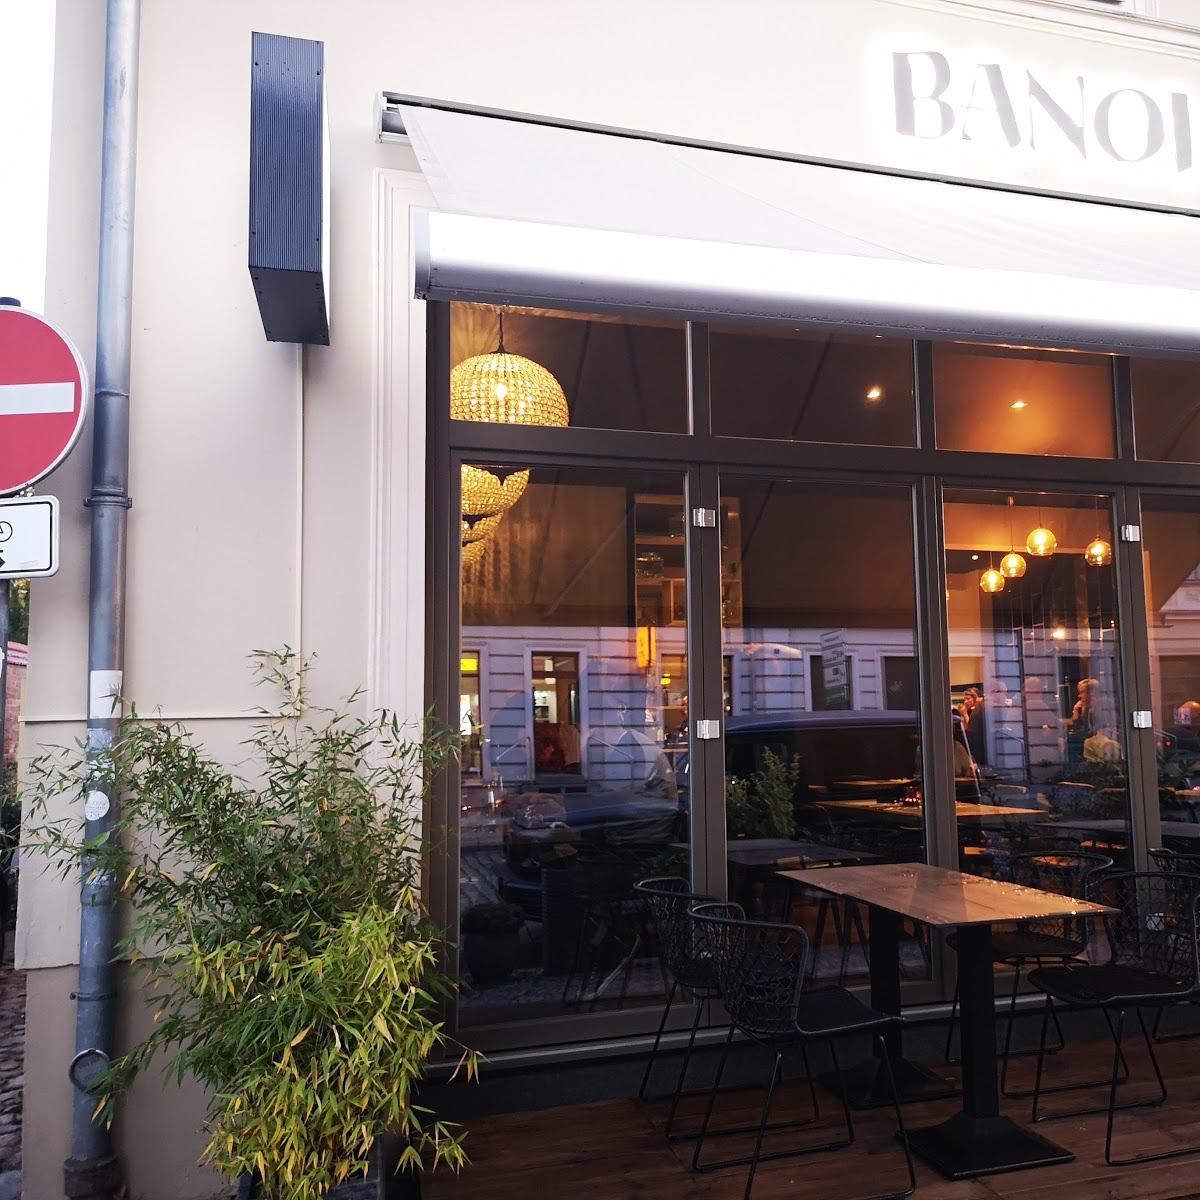 Restaurant "Banoi" in  Neuruppin